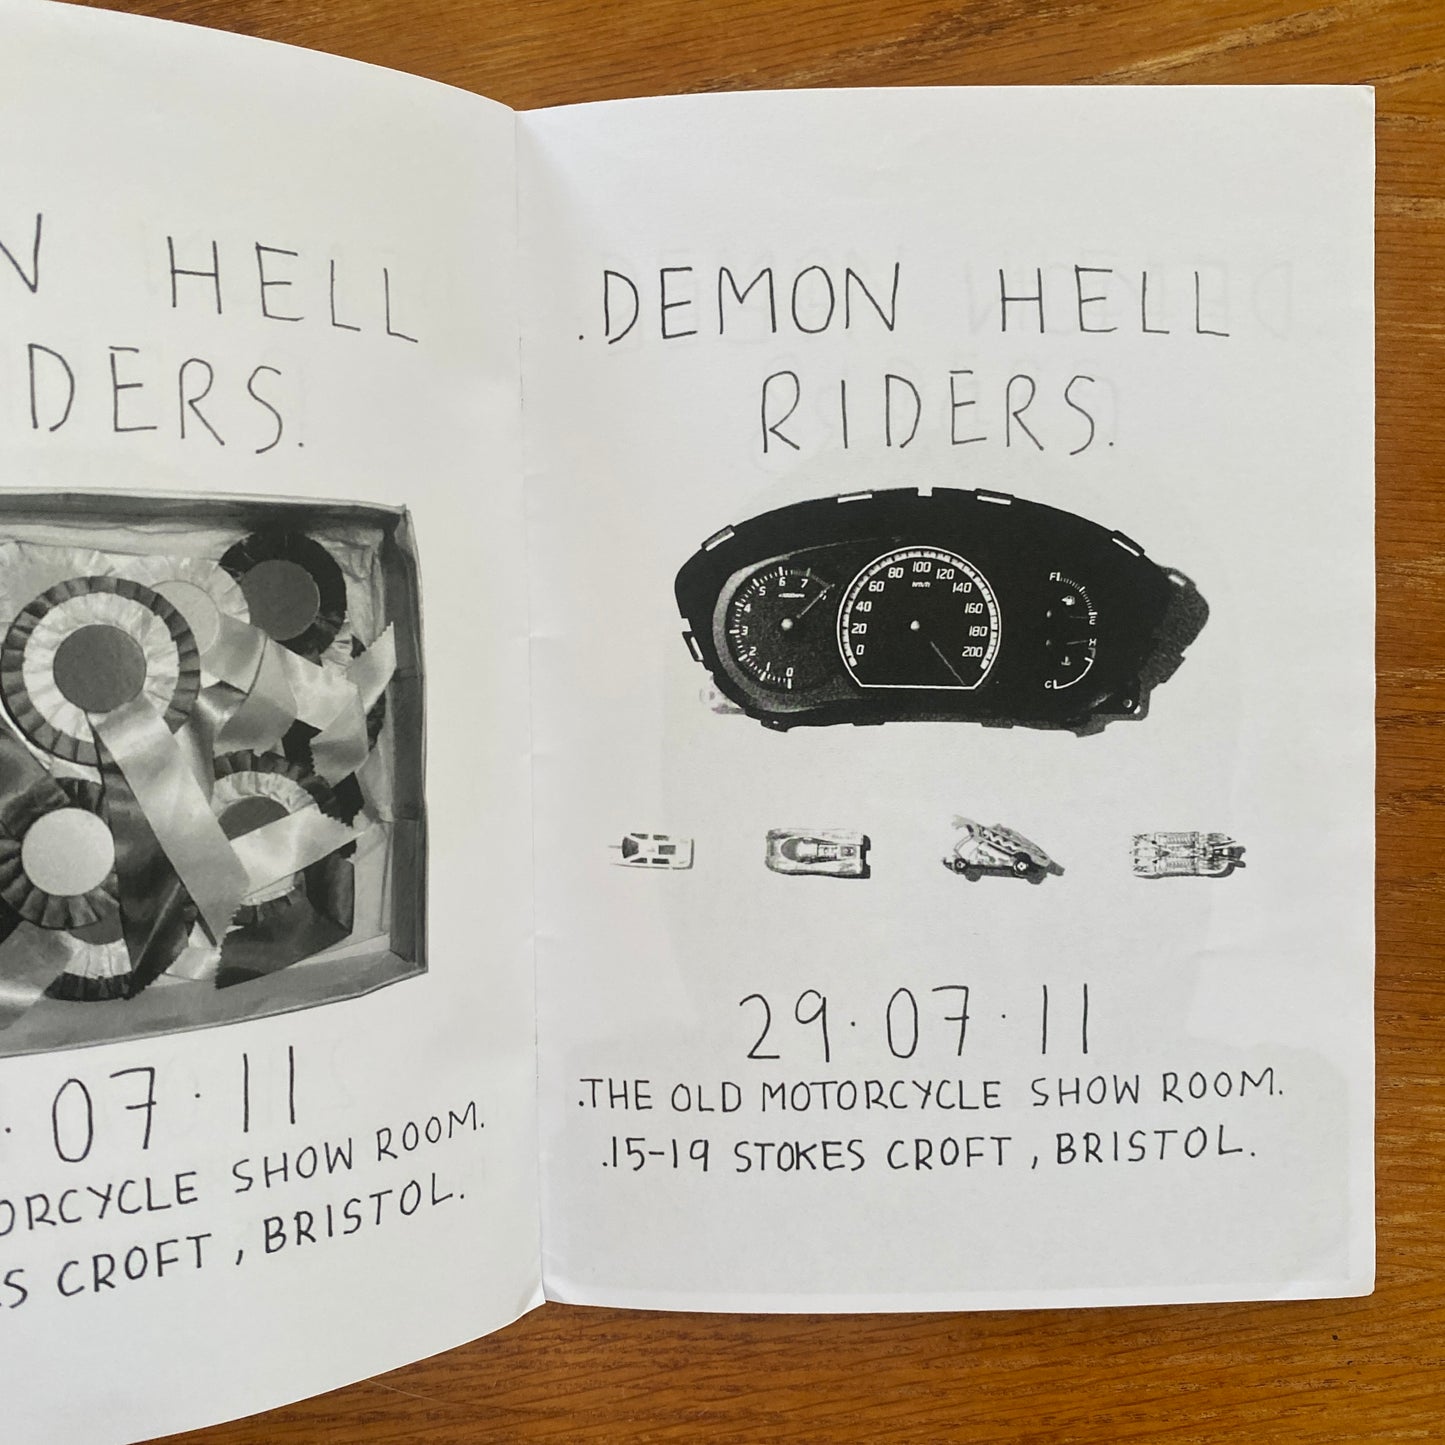 Demon Hell Riders - PETRO